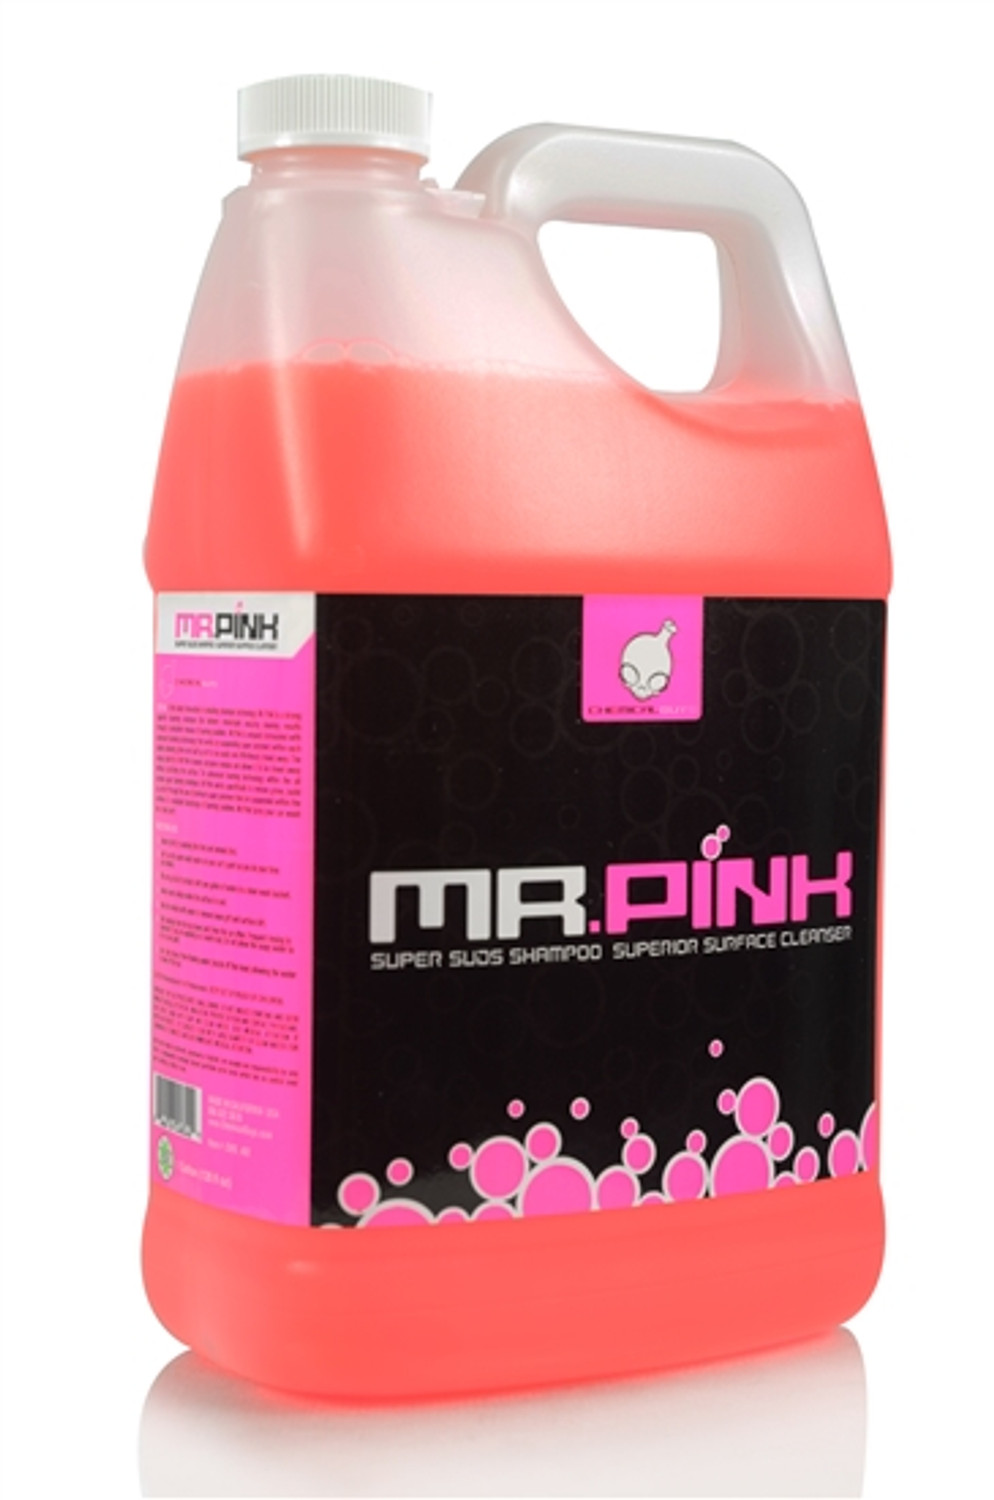 Shop Chemical Guys Mr Pink online